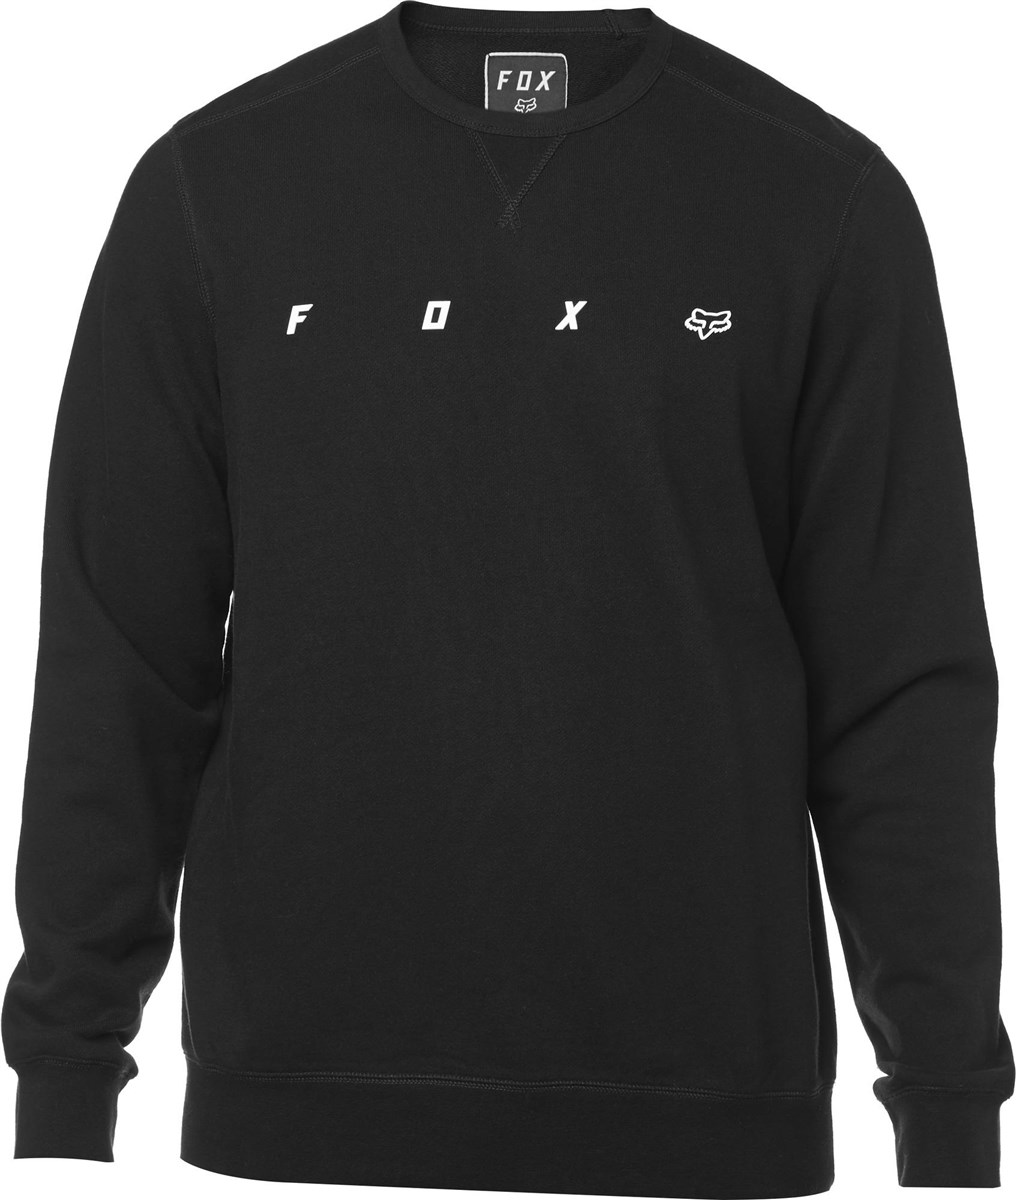 Fox Clothing Maxis Crew Fleece product image